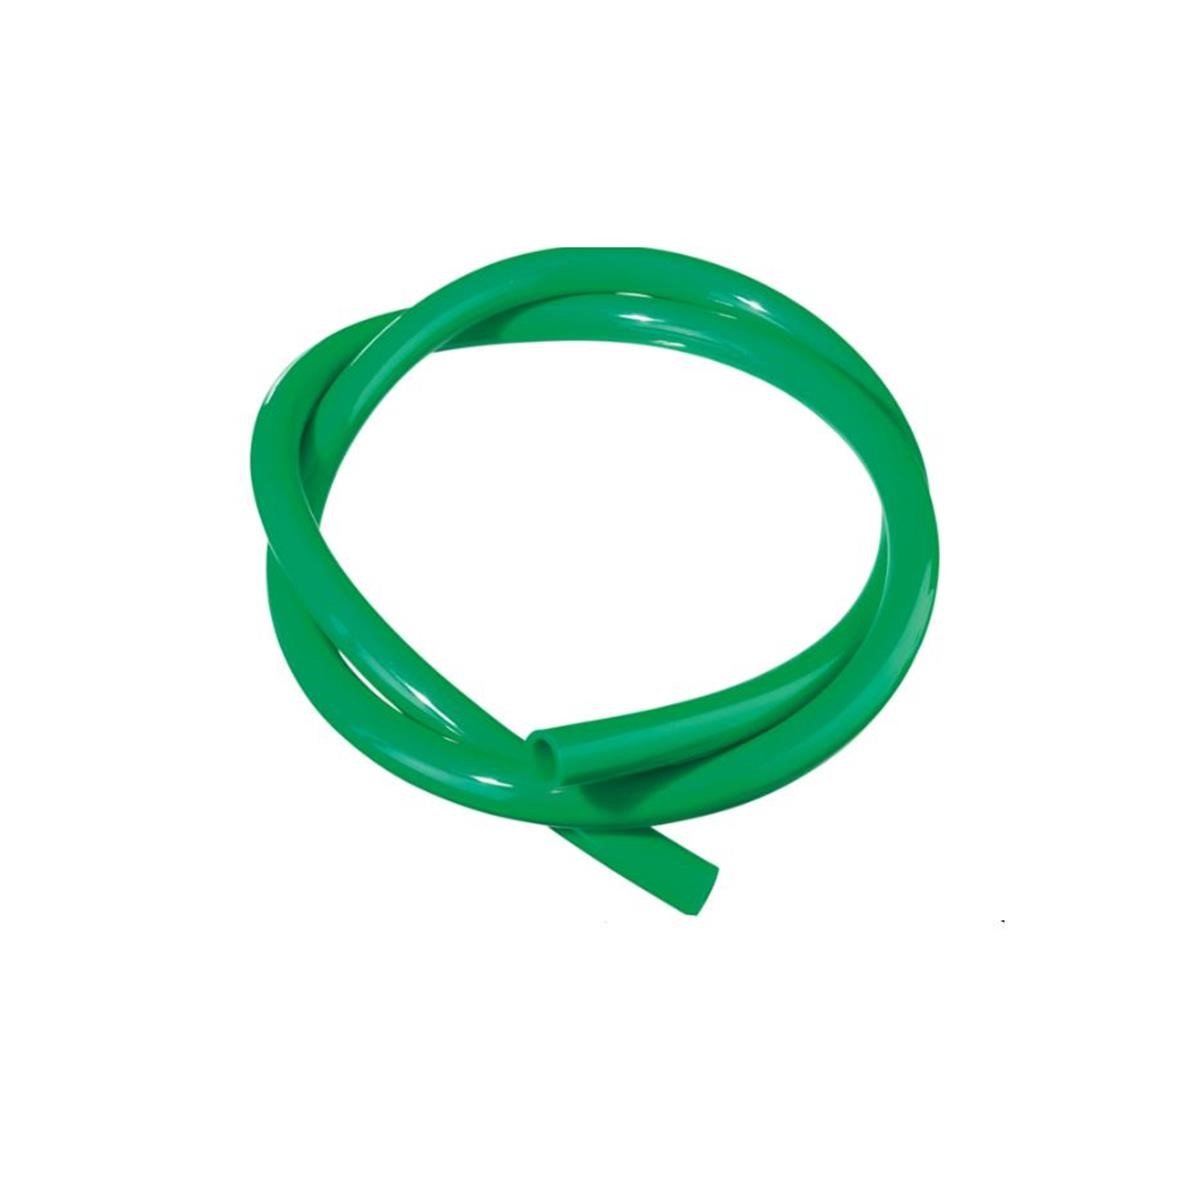 Moose Racing fuel hose 6.4 mm Green, 91 cm long